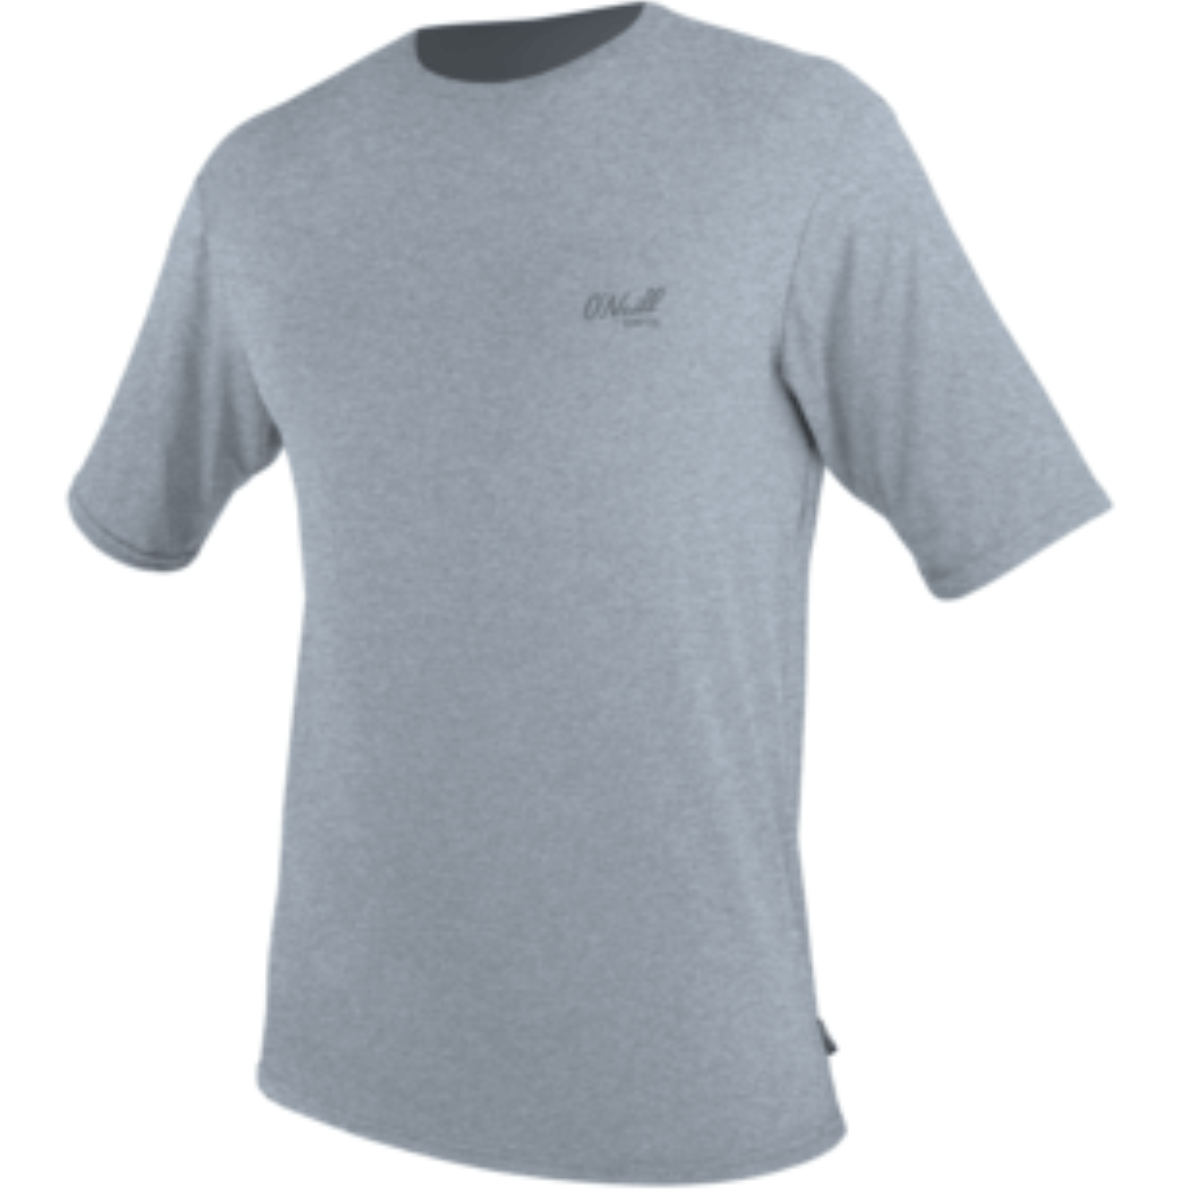 Oneill Blueprint Sun Shirt in Fog Blue - BoardCo